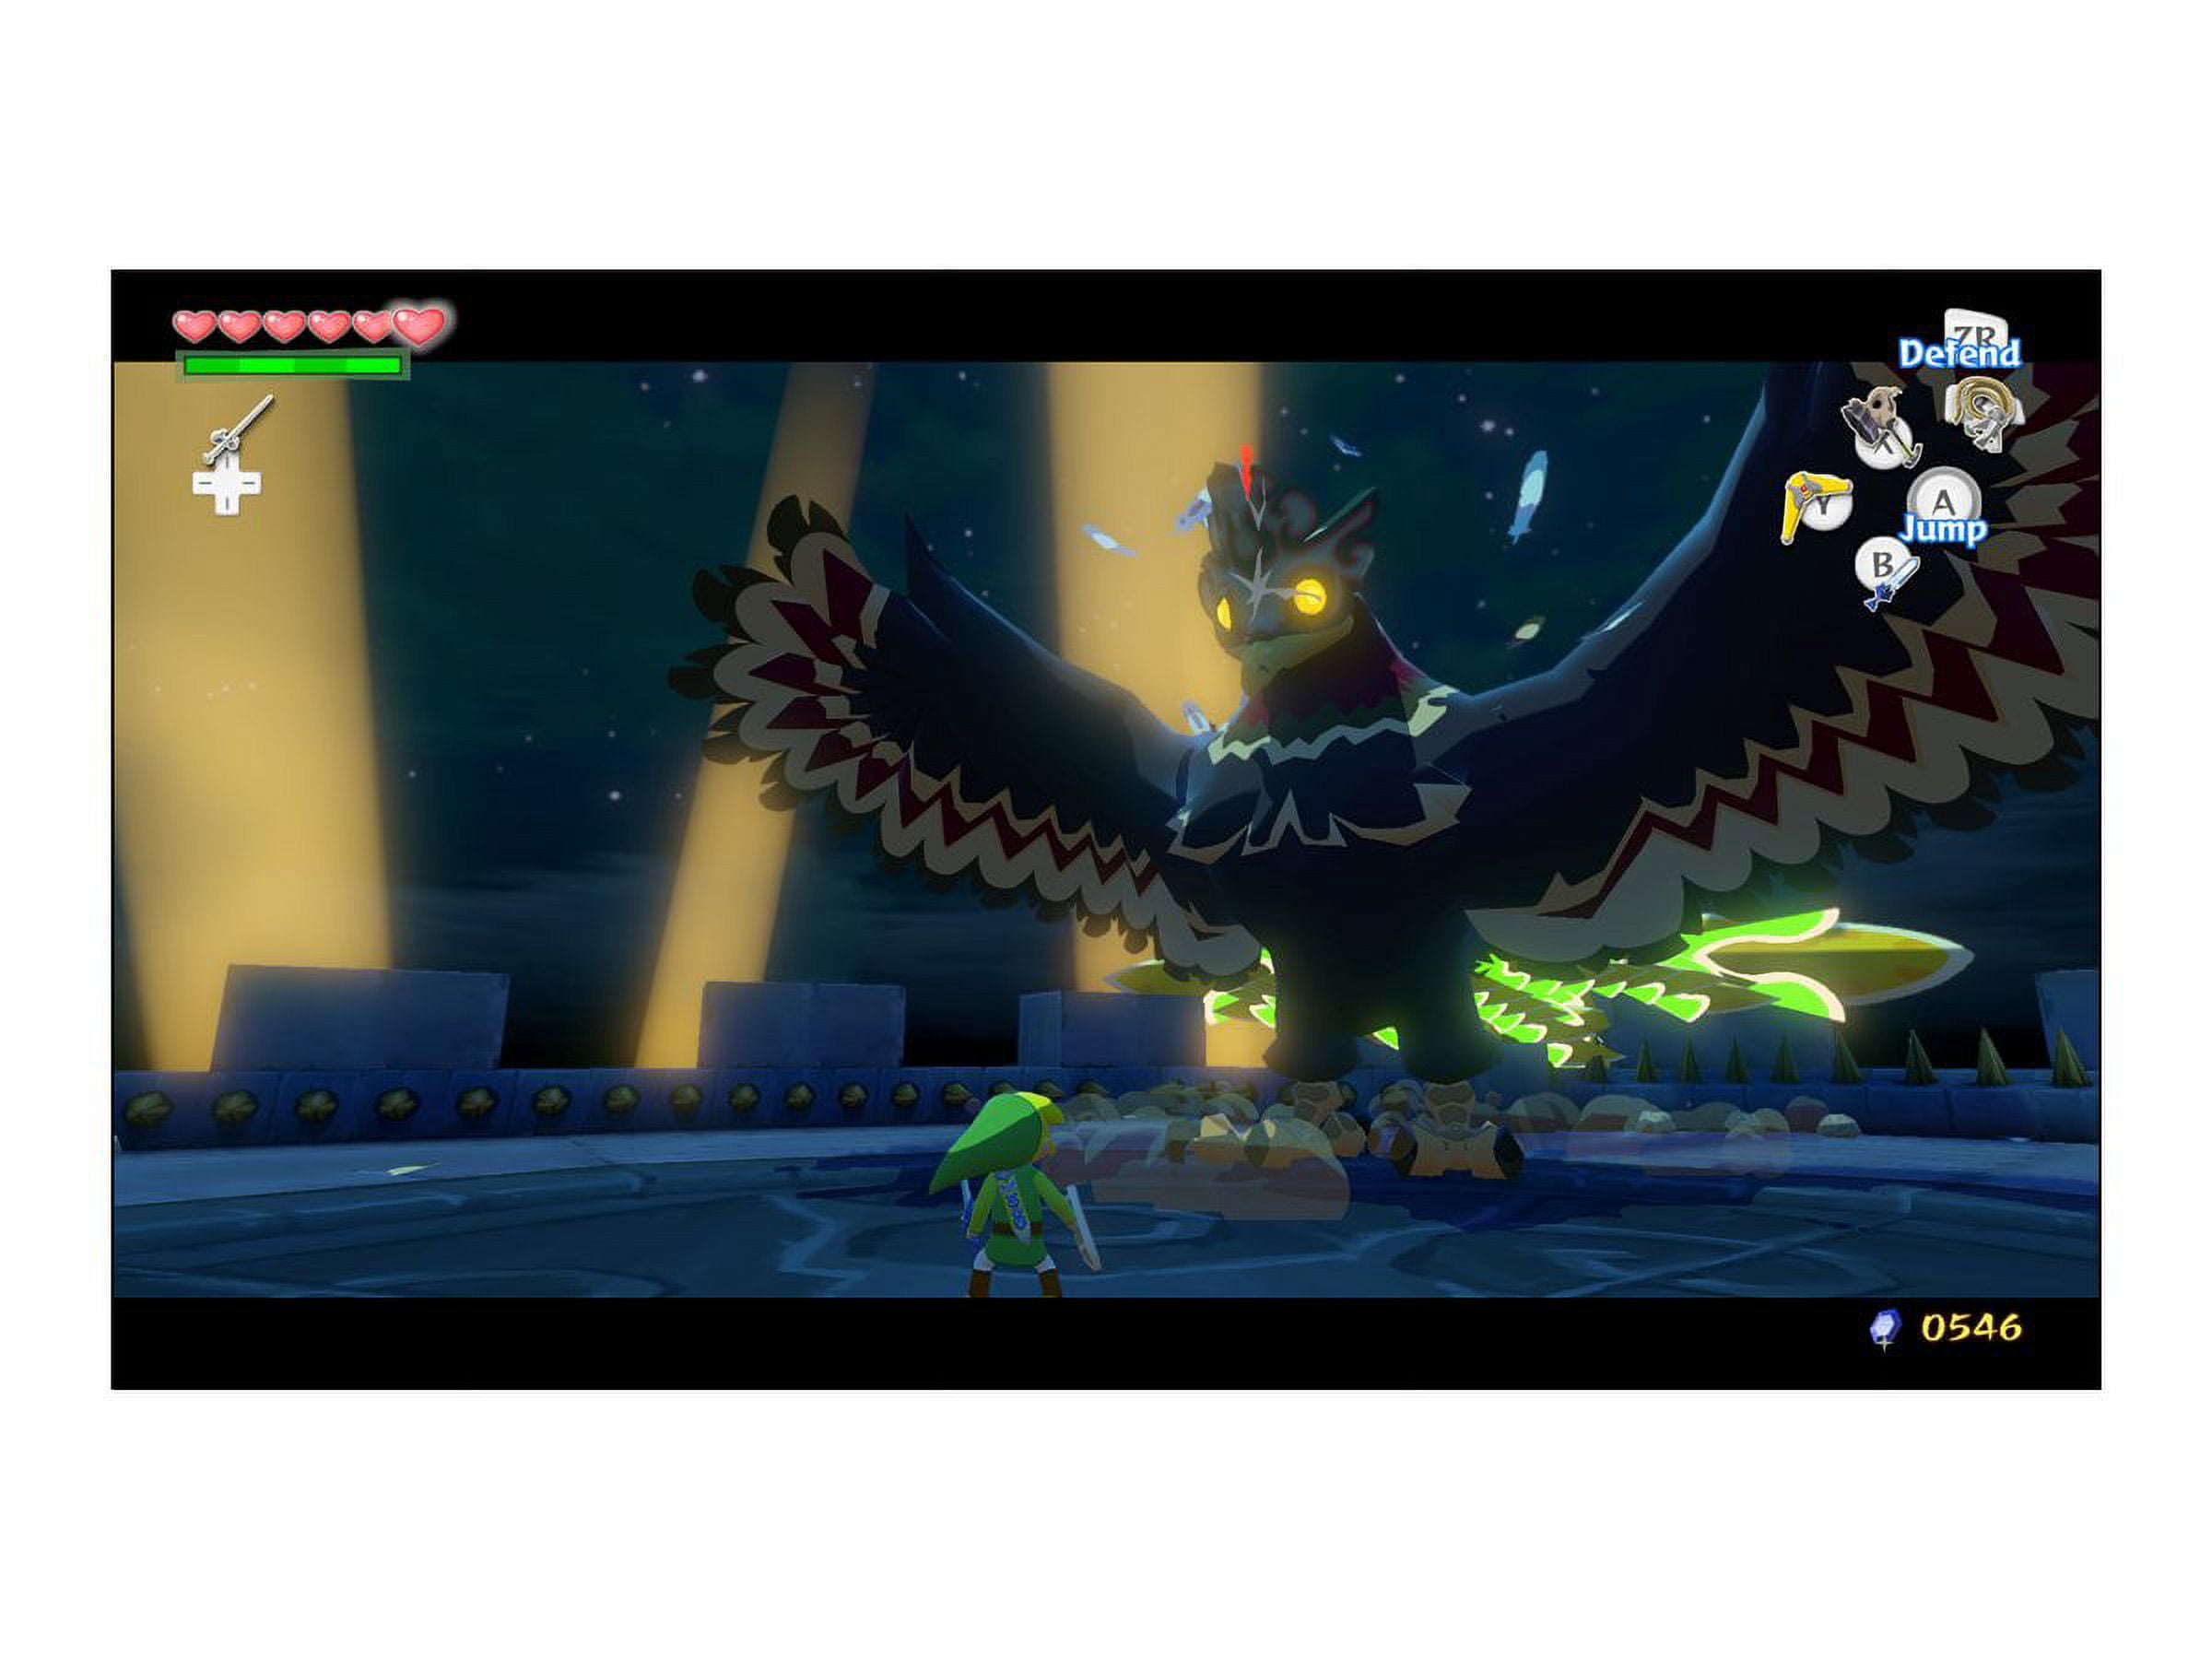 The Legend of Zelda: The Wind Waker HD - Wii U by Legend-tony980